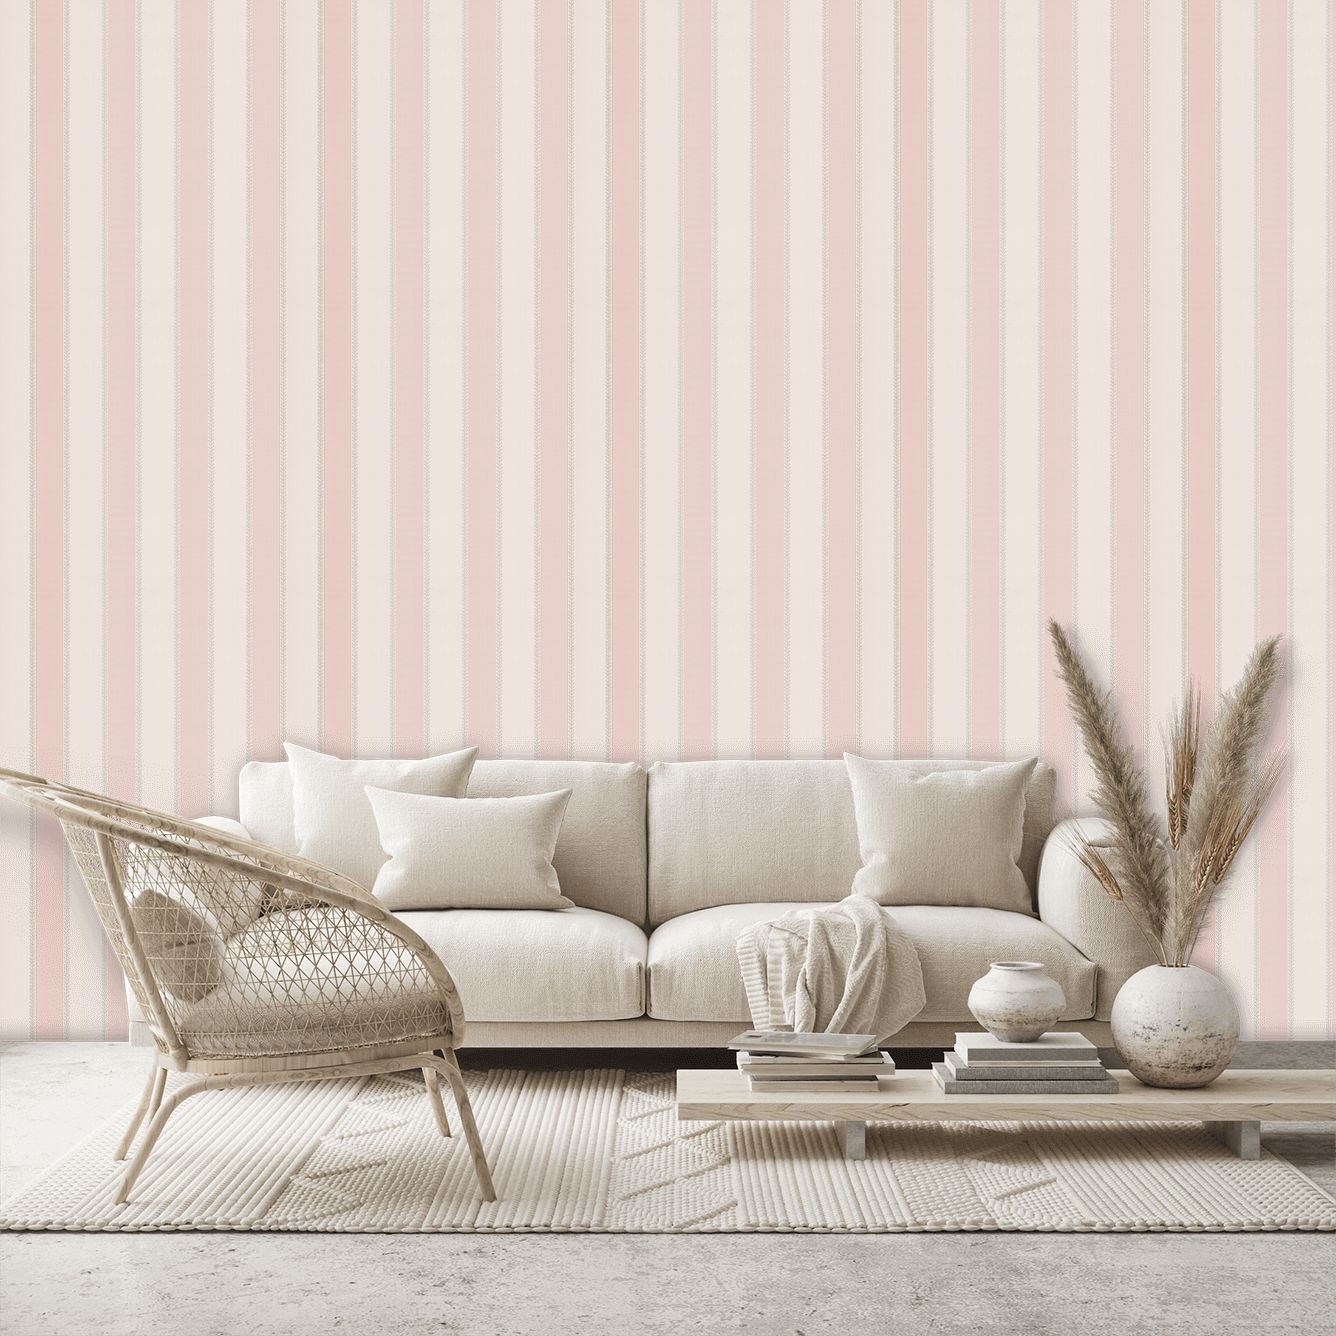 Painters Stripe Wallpaper in Pink by Barneby Gates  Jane Clayton